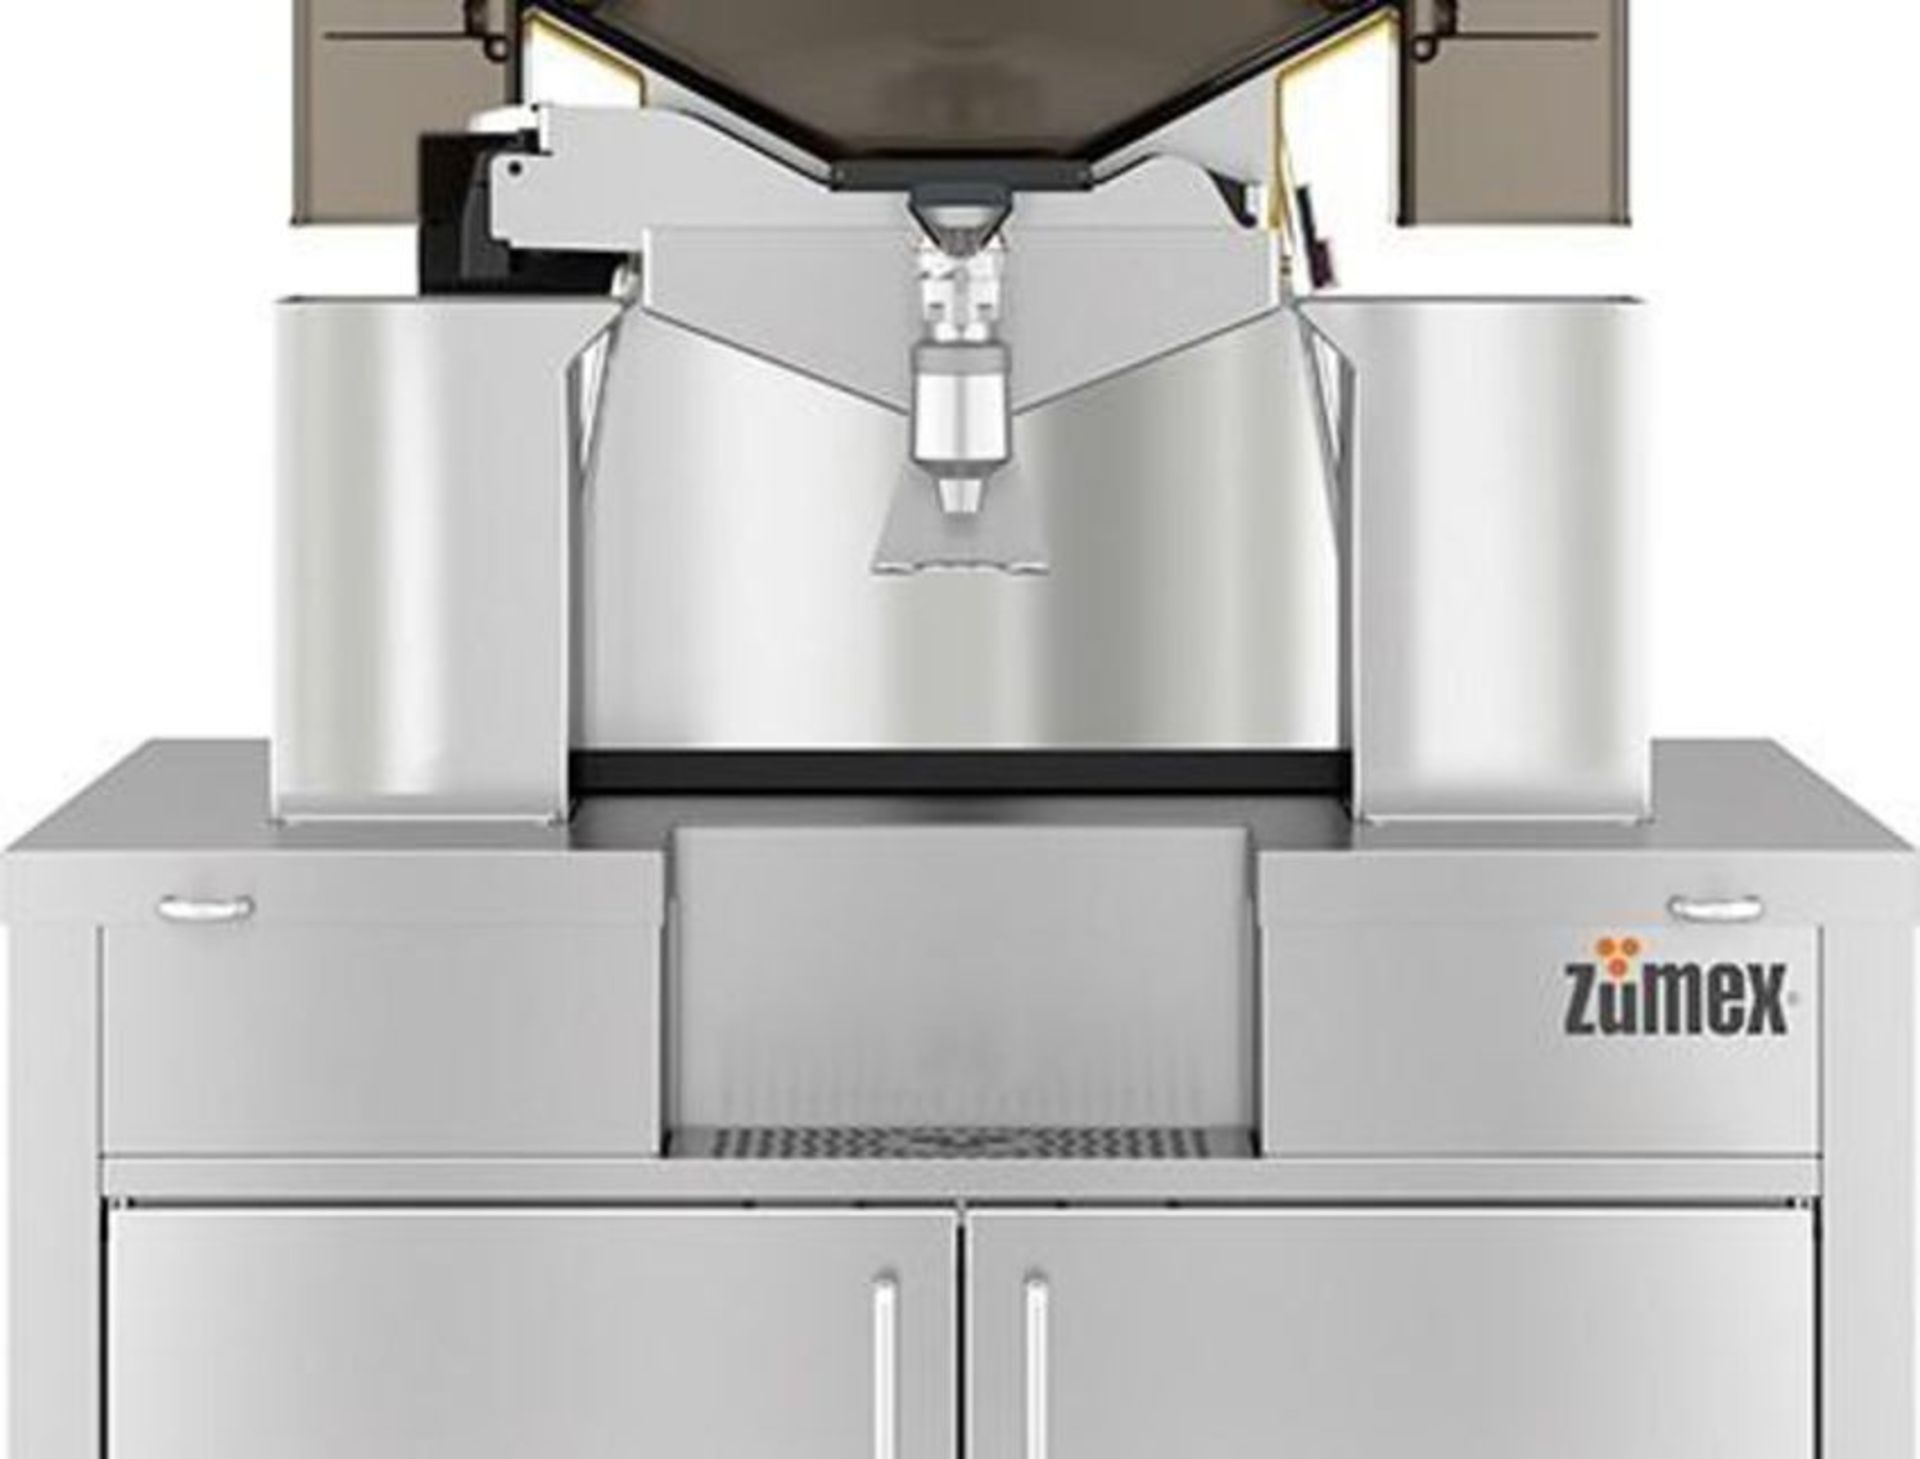 1 x Zumex Speed S +Plus Self-Service Podium Commercial Citrus Juicer - Manufactured in 2018 - Image 3 of 20